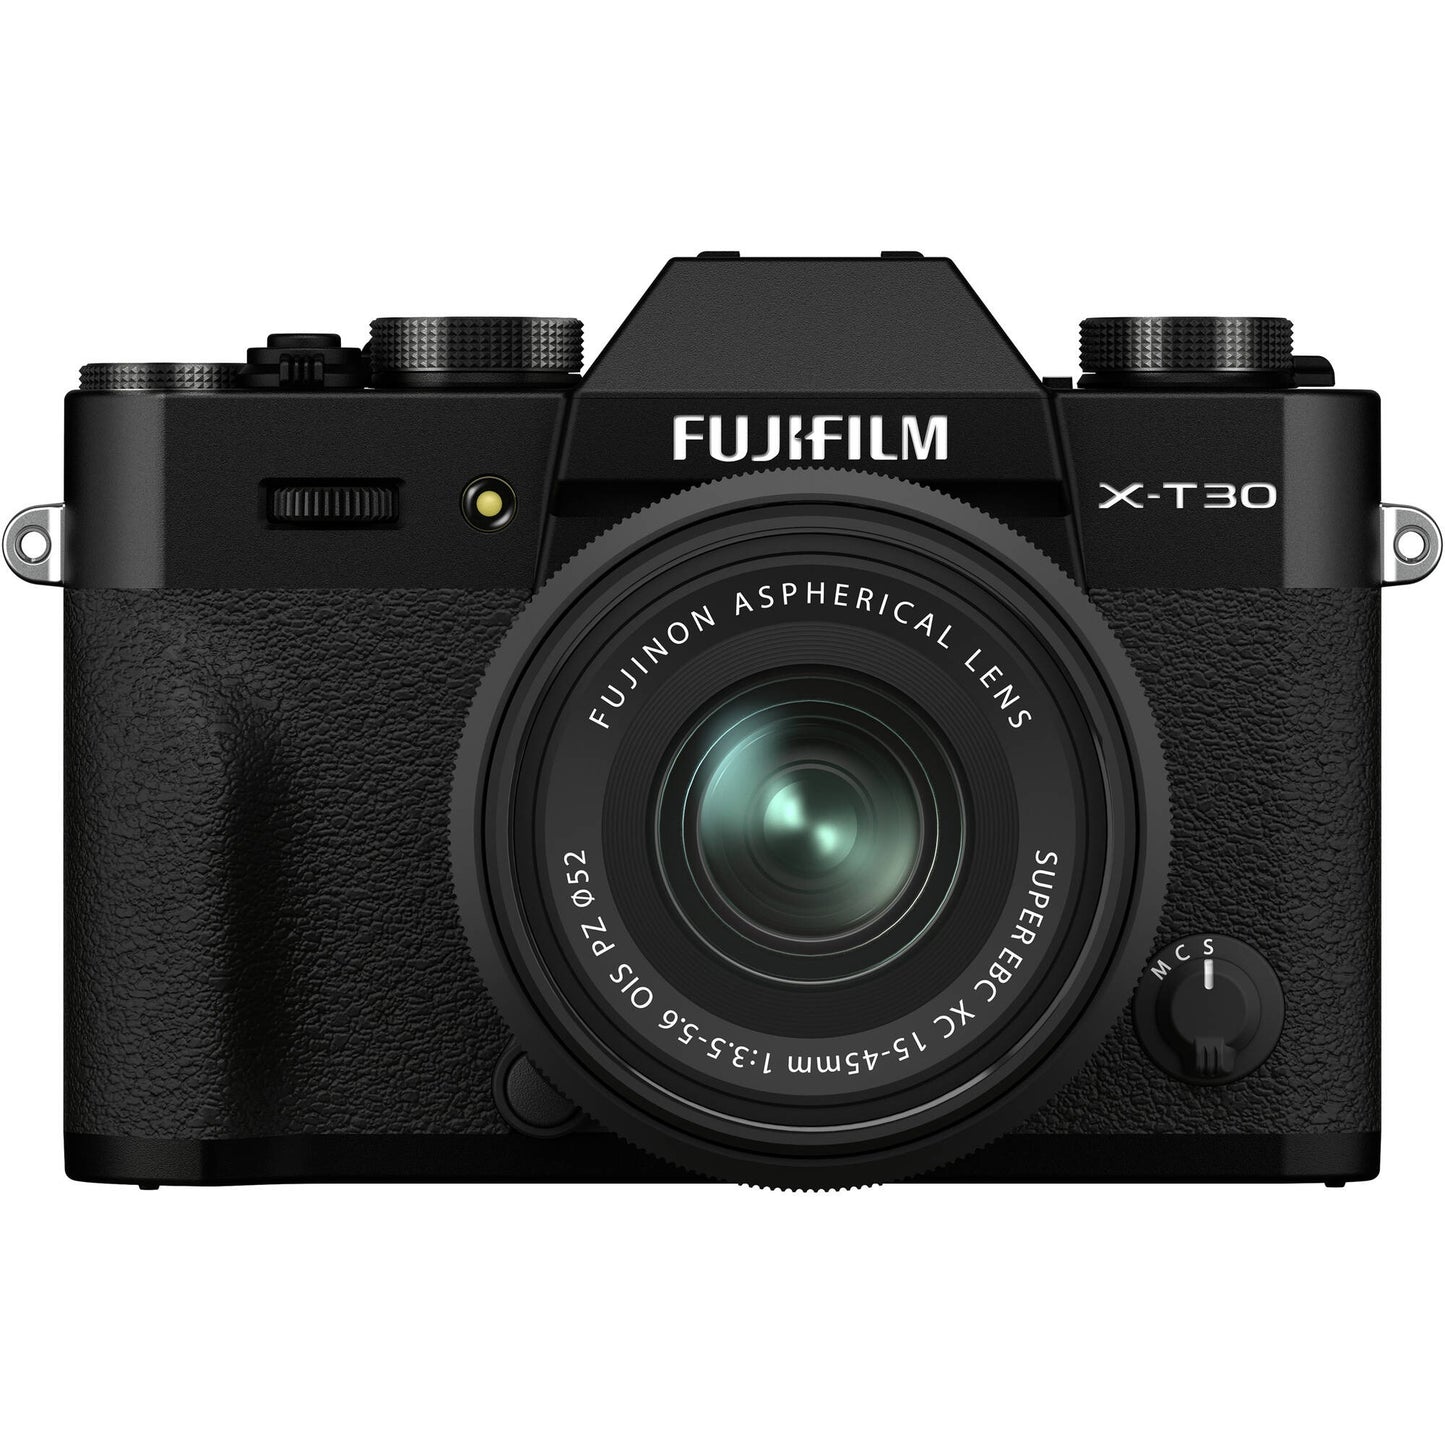 FUJIFILM X-T30 II Mirrorless Digital Camera with XC 15-45mm OIS PZ Lens, 26.1MP APS-C X-Trans CMOS 4 Sensor, 4K UHD DCI F-Log Video Recording, X-Processor 4 with Quad CPU, Wireless Bluetooth, Autofocus, 18 Film Simulation (Black, Silver)